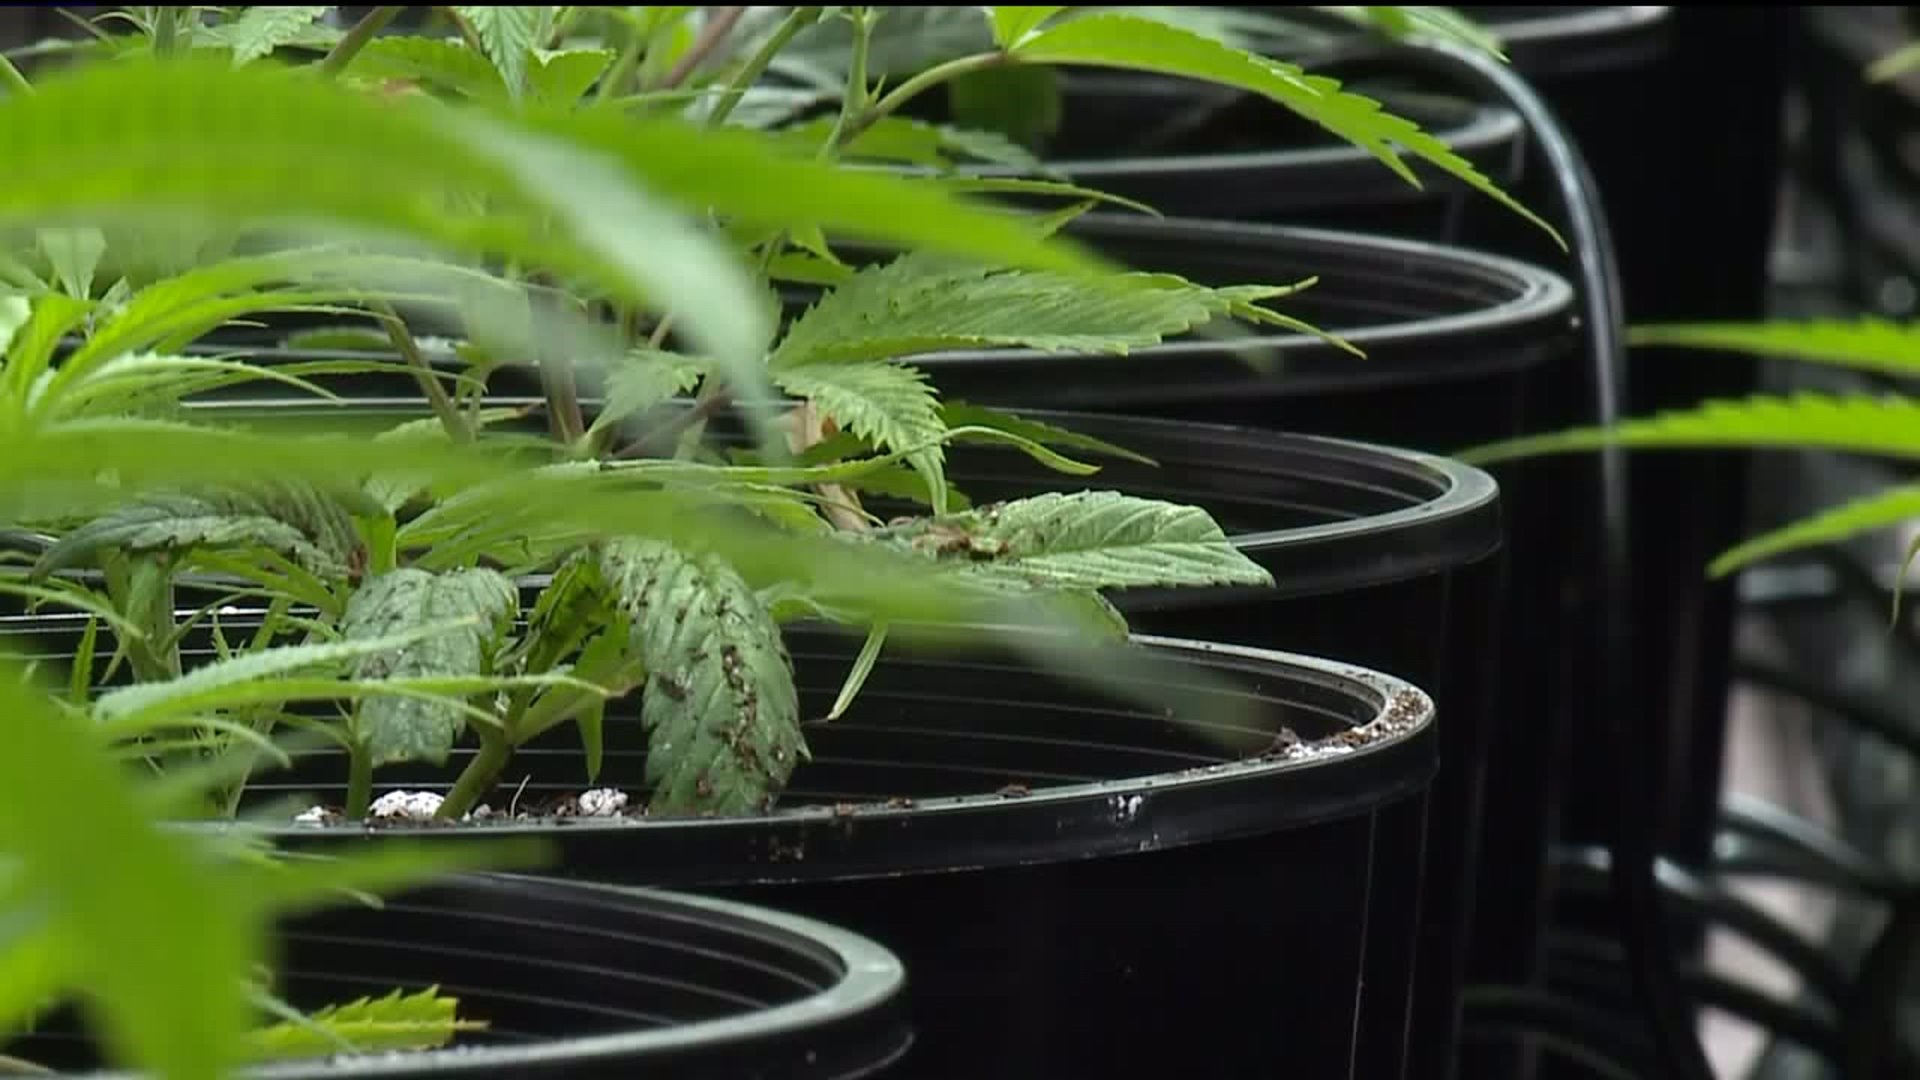 Clinton County Medical Marijuana Facility Up and Growing